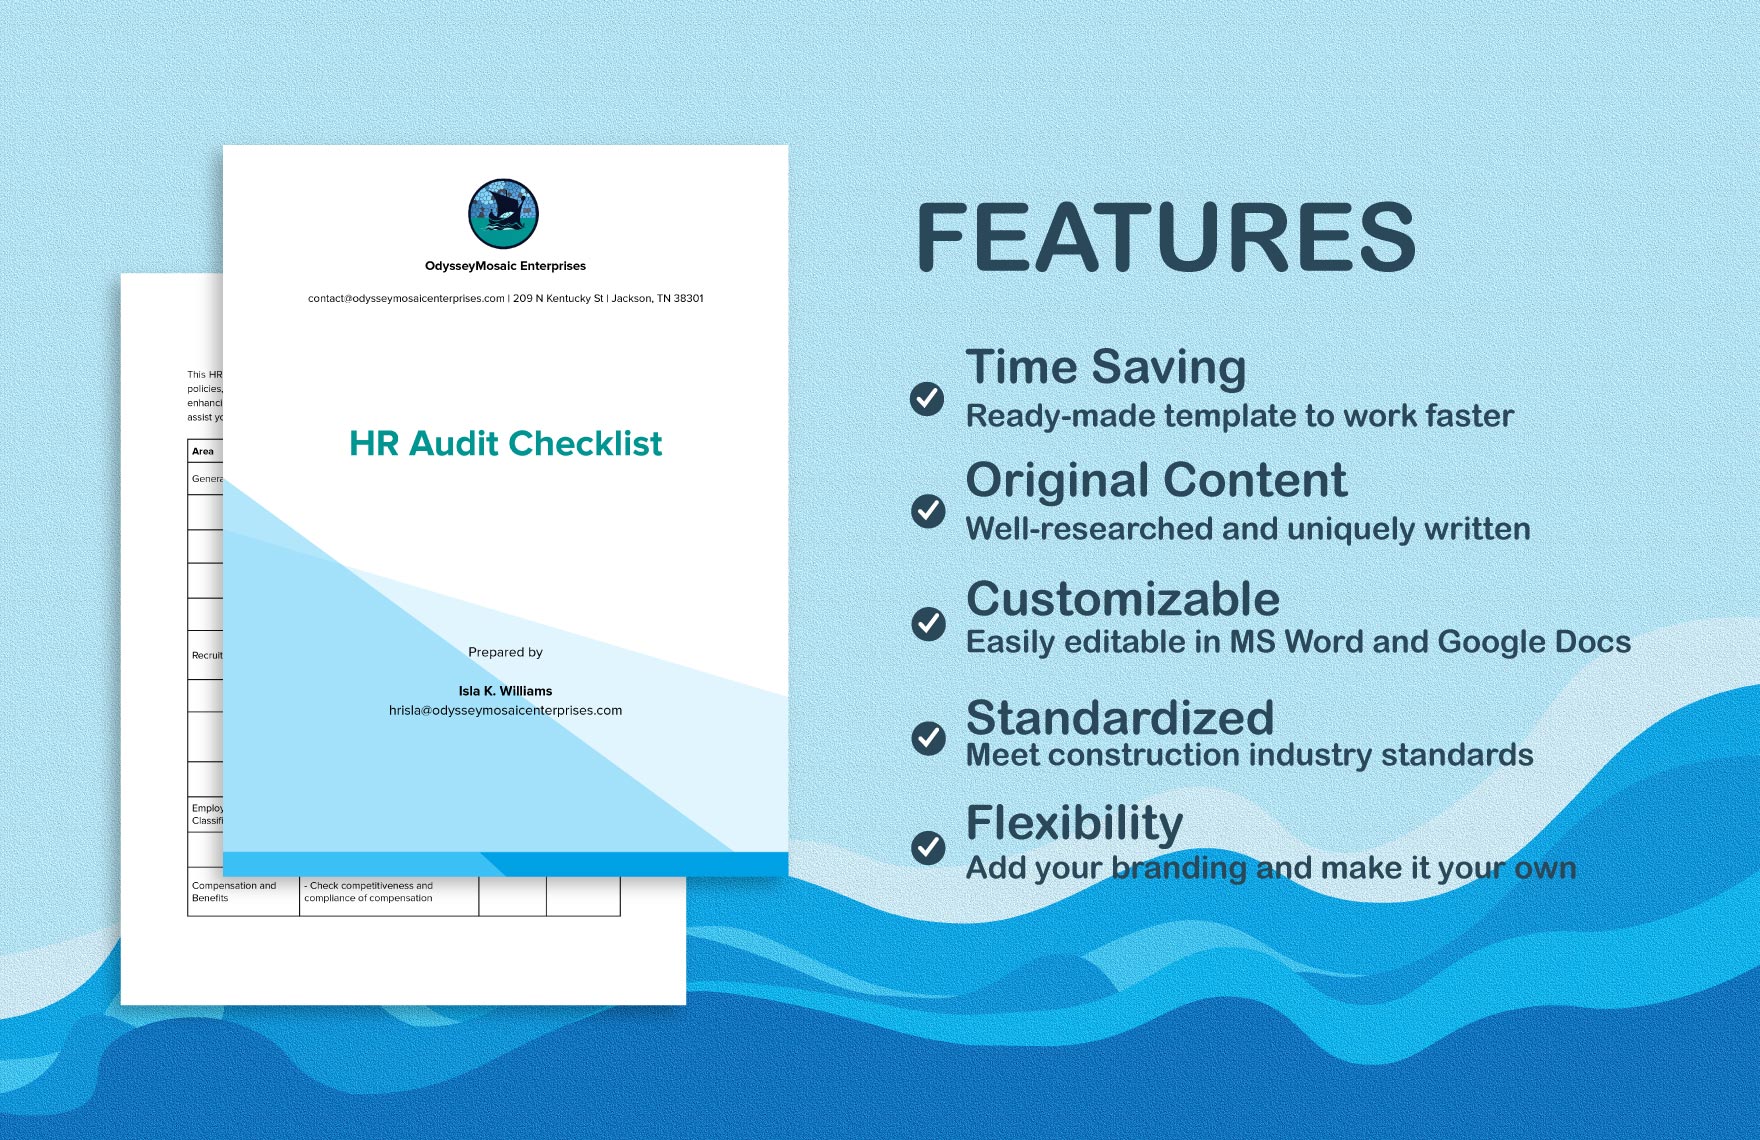  Simple HR Audit Checklist Template